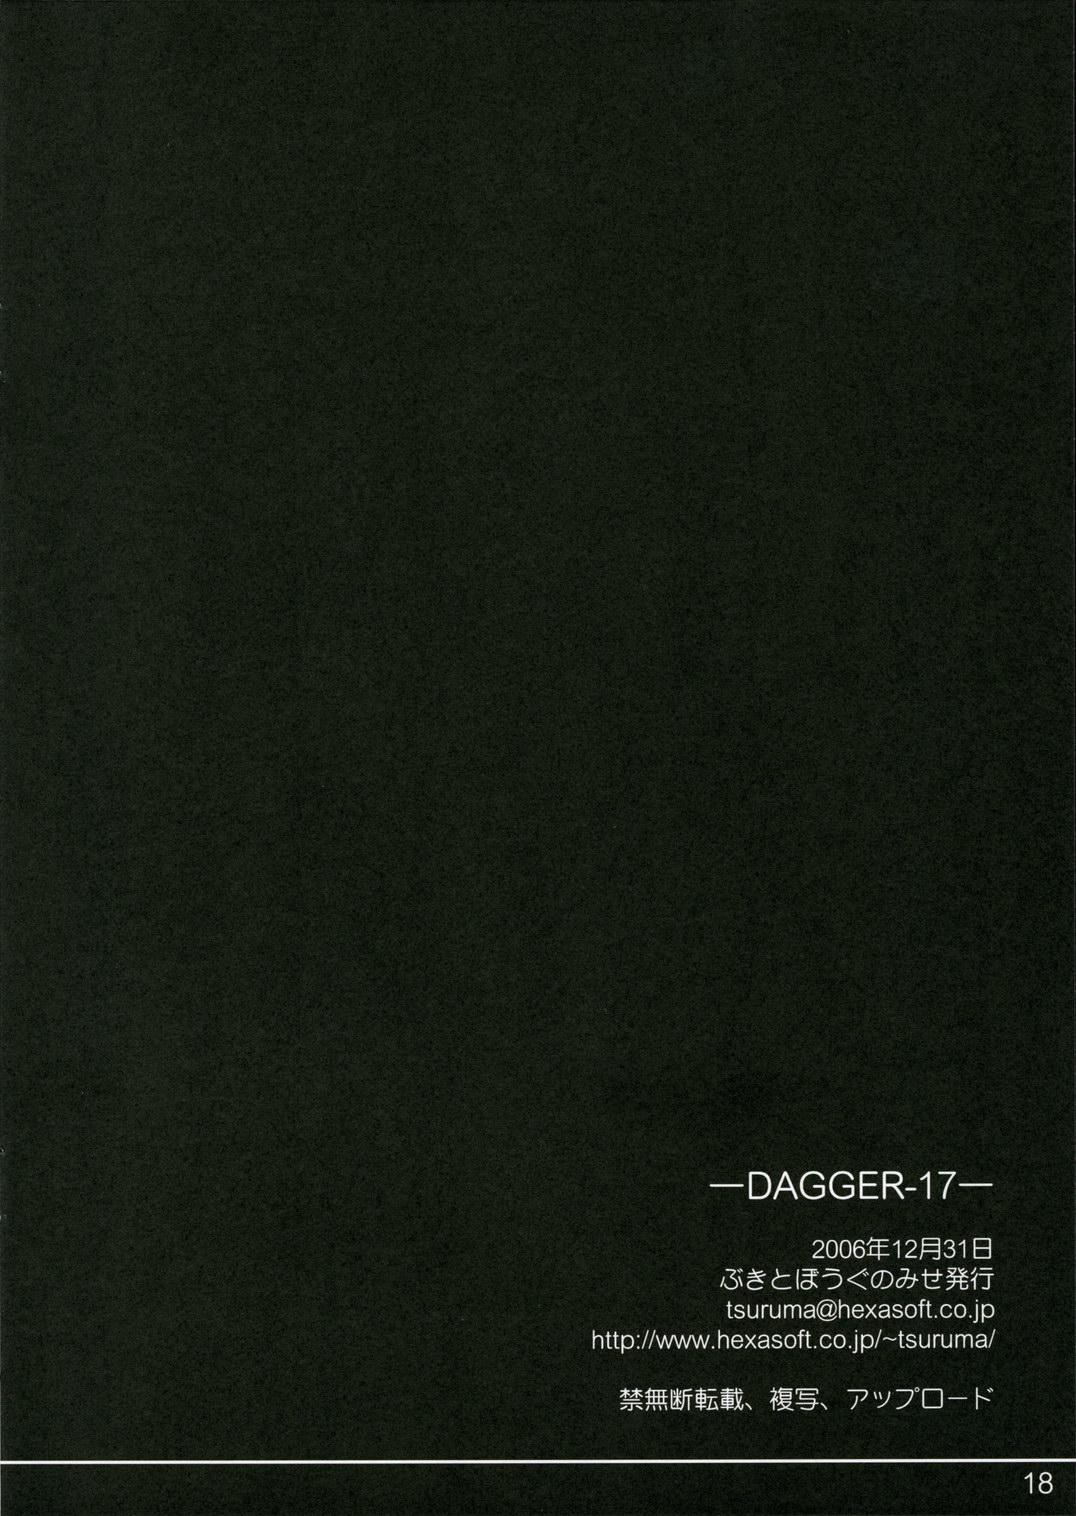 Dagger-17 16